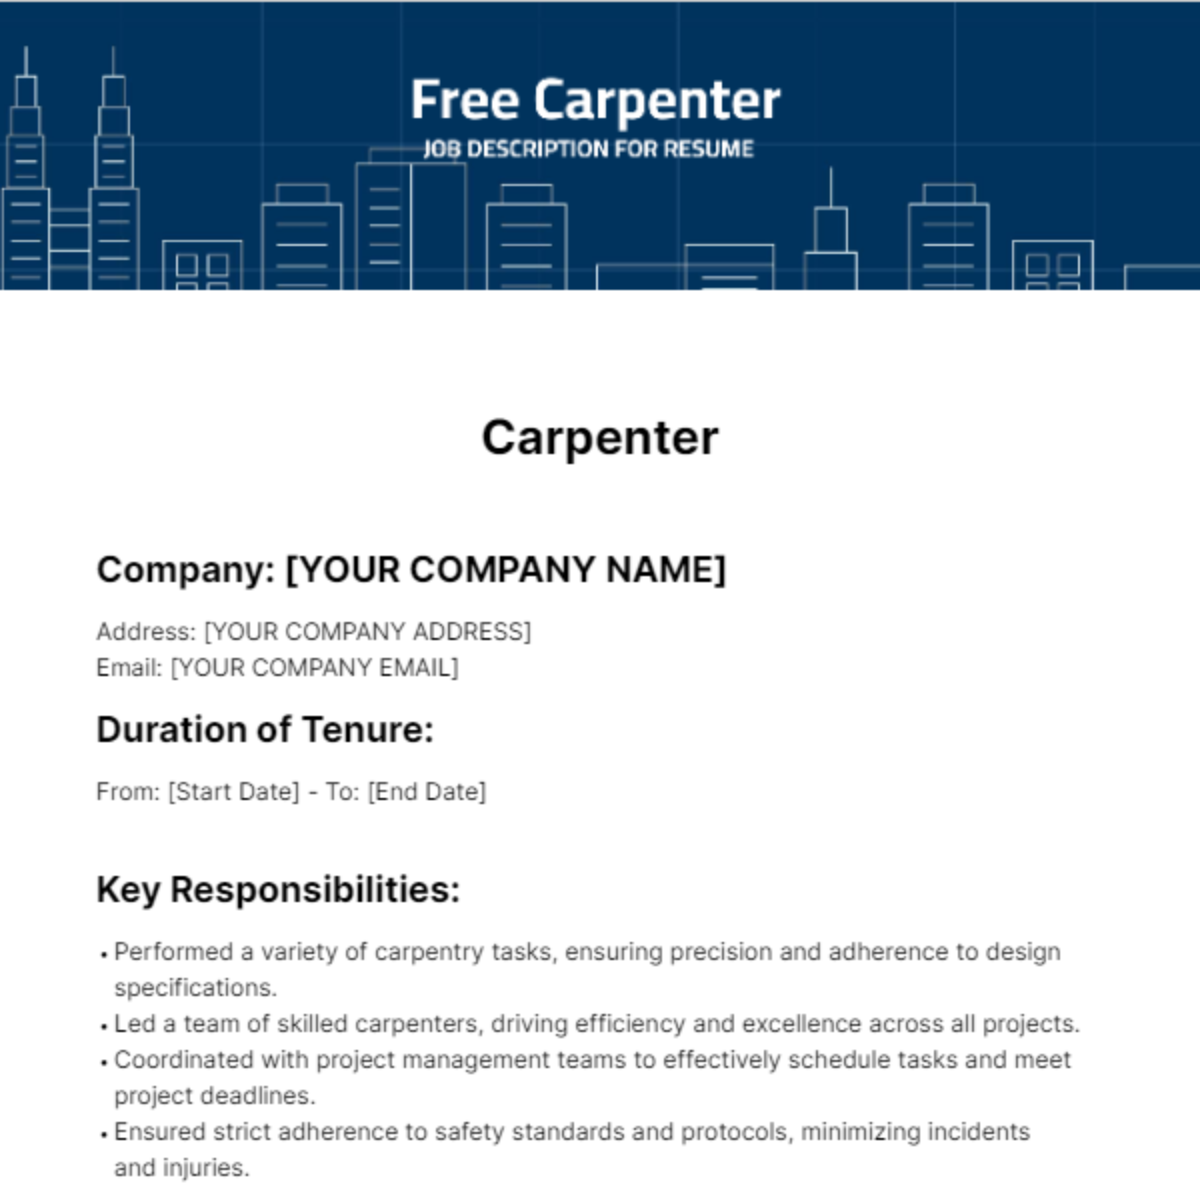 Free Carpenter Job Description for Resume Template